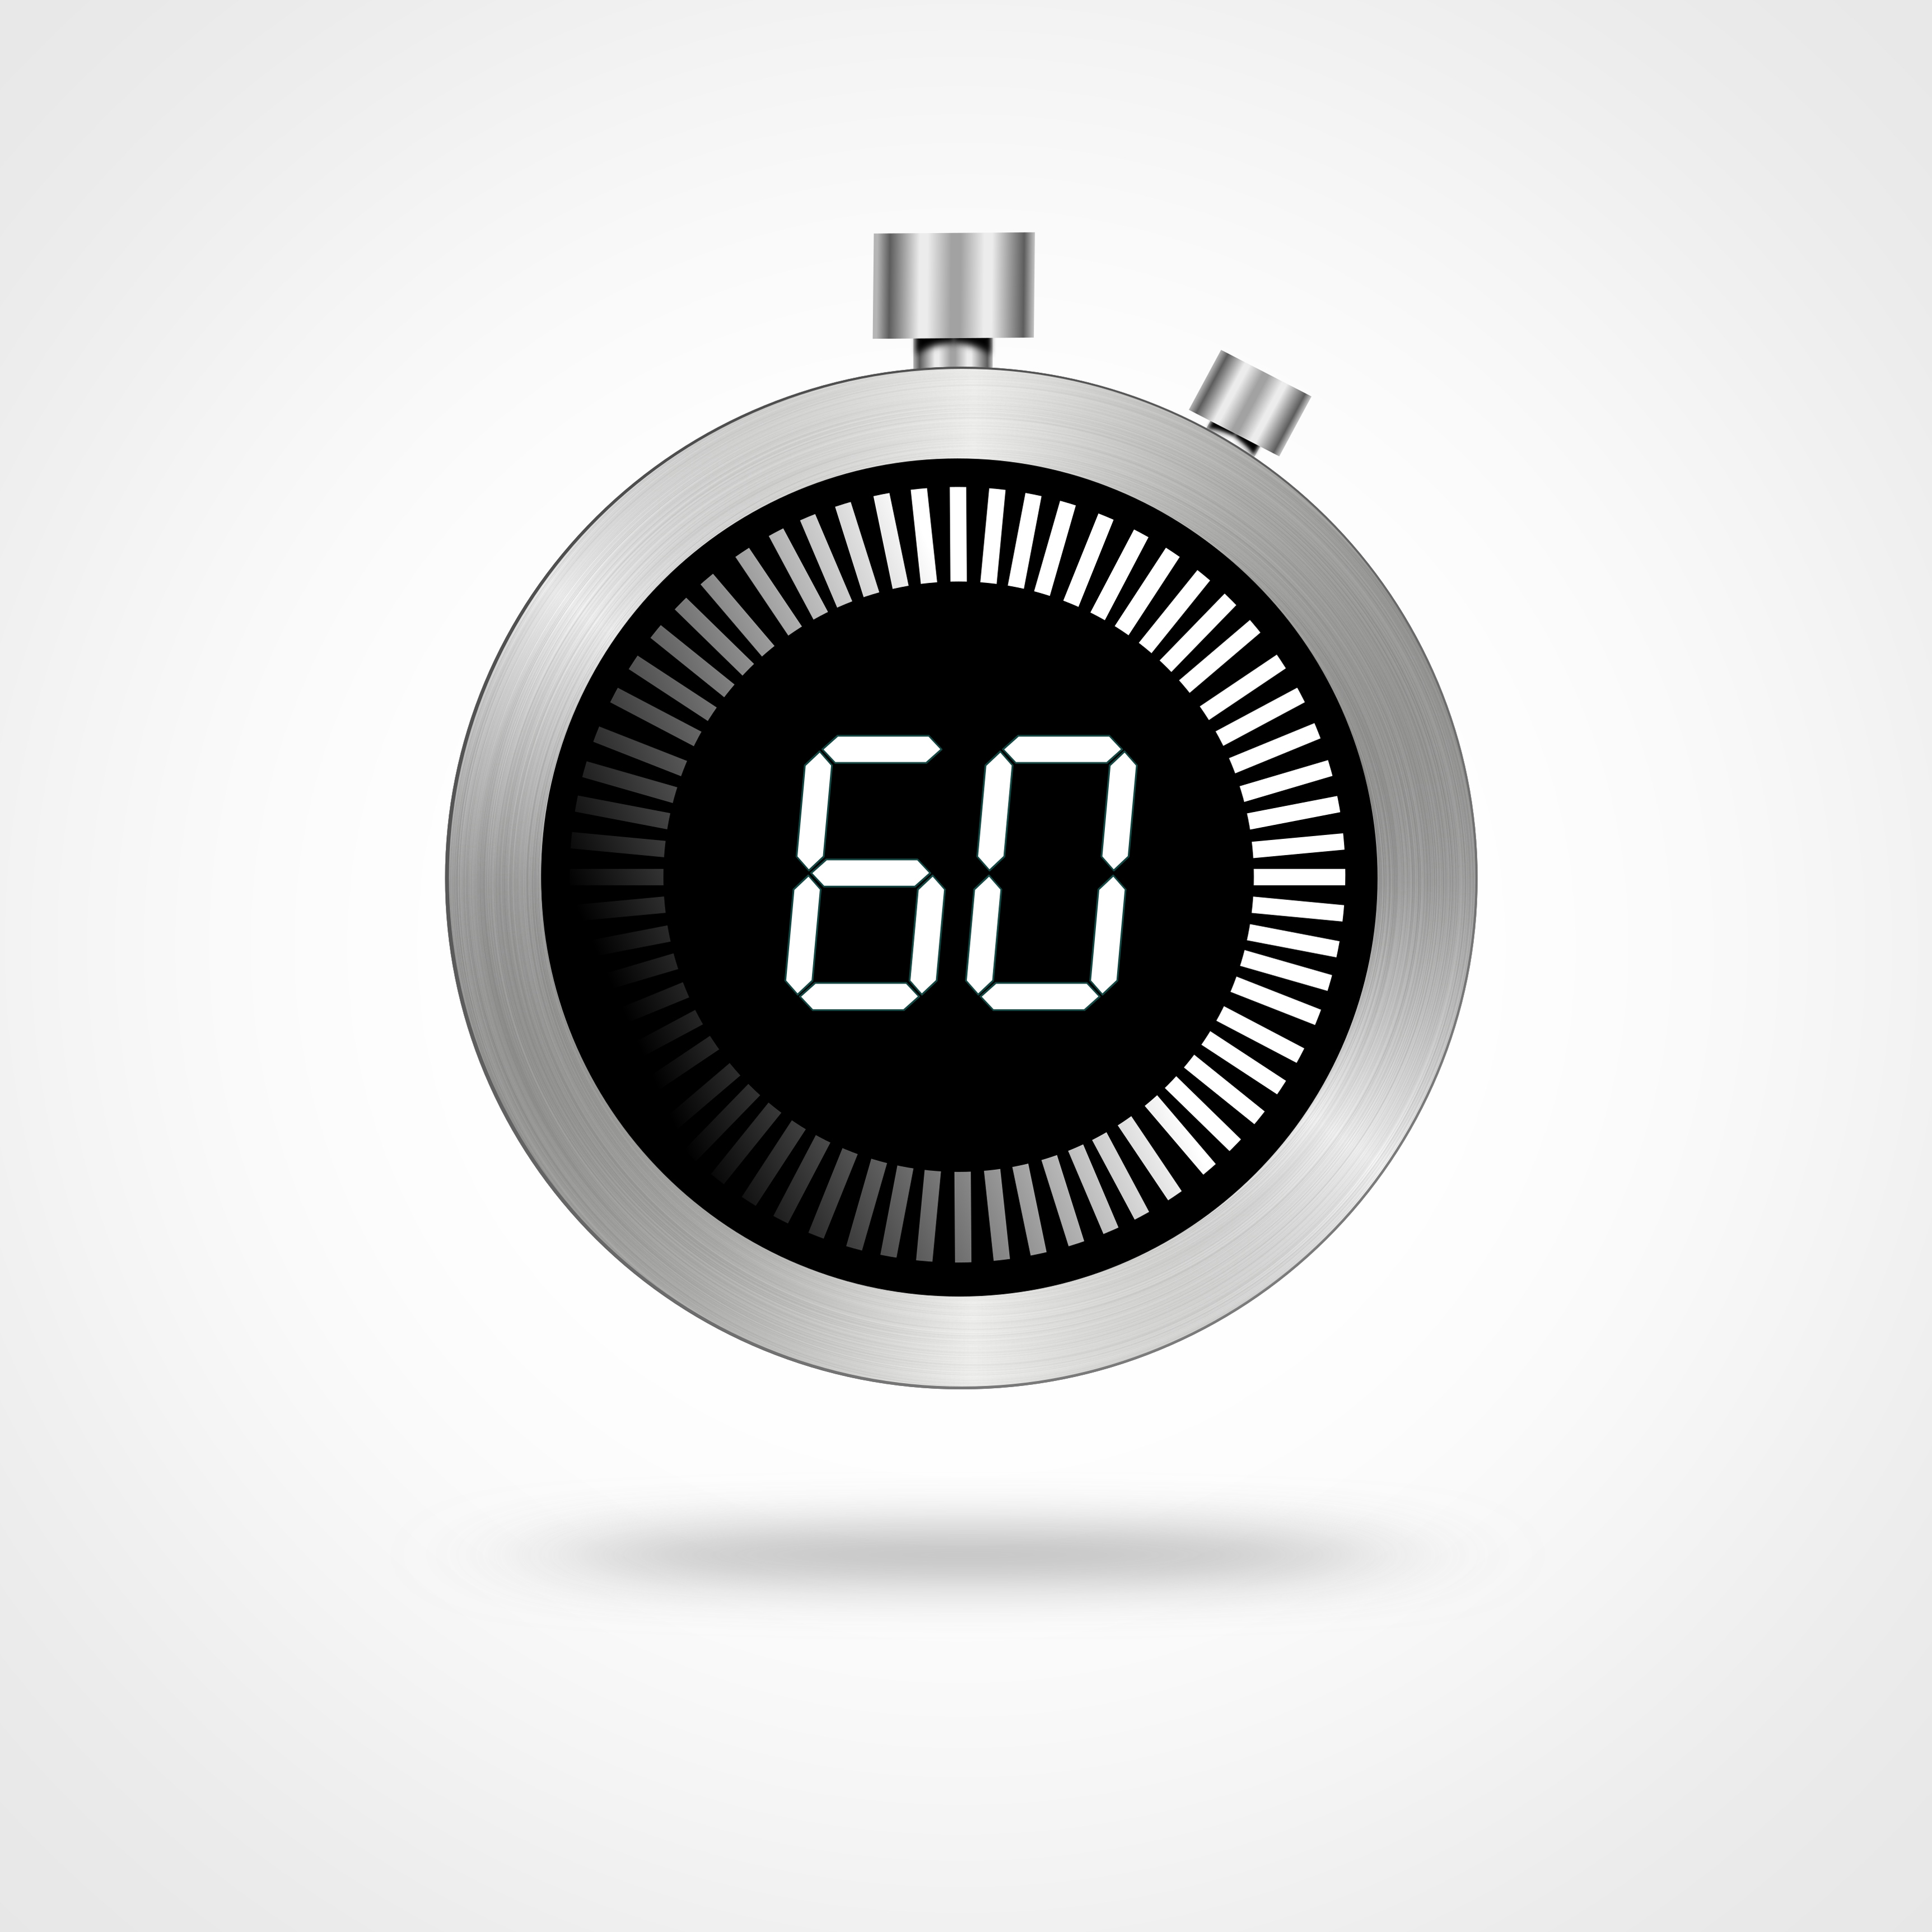 Stopwatch - countdown concept photo